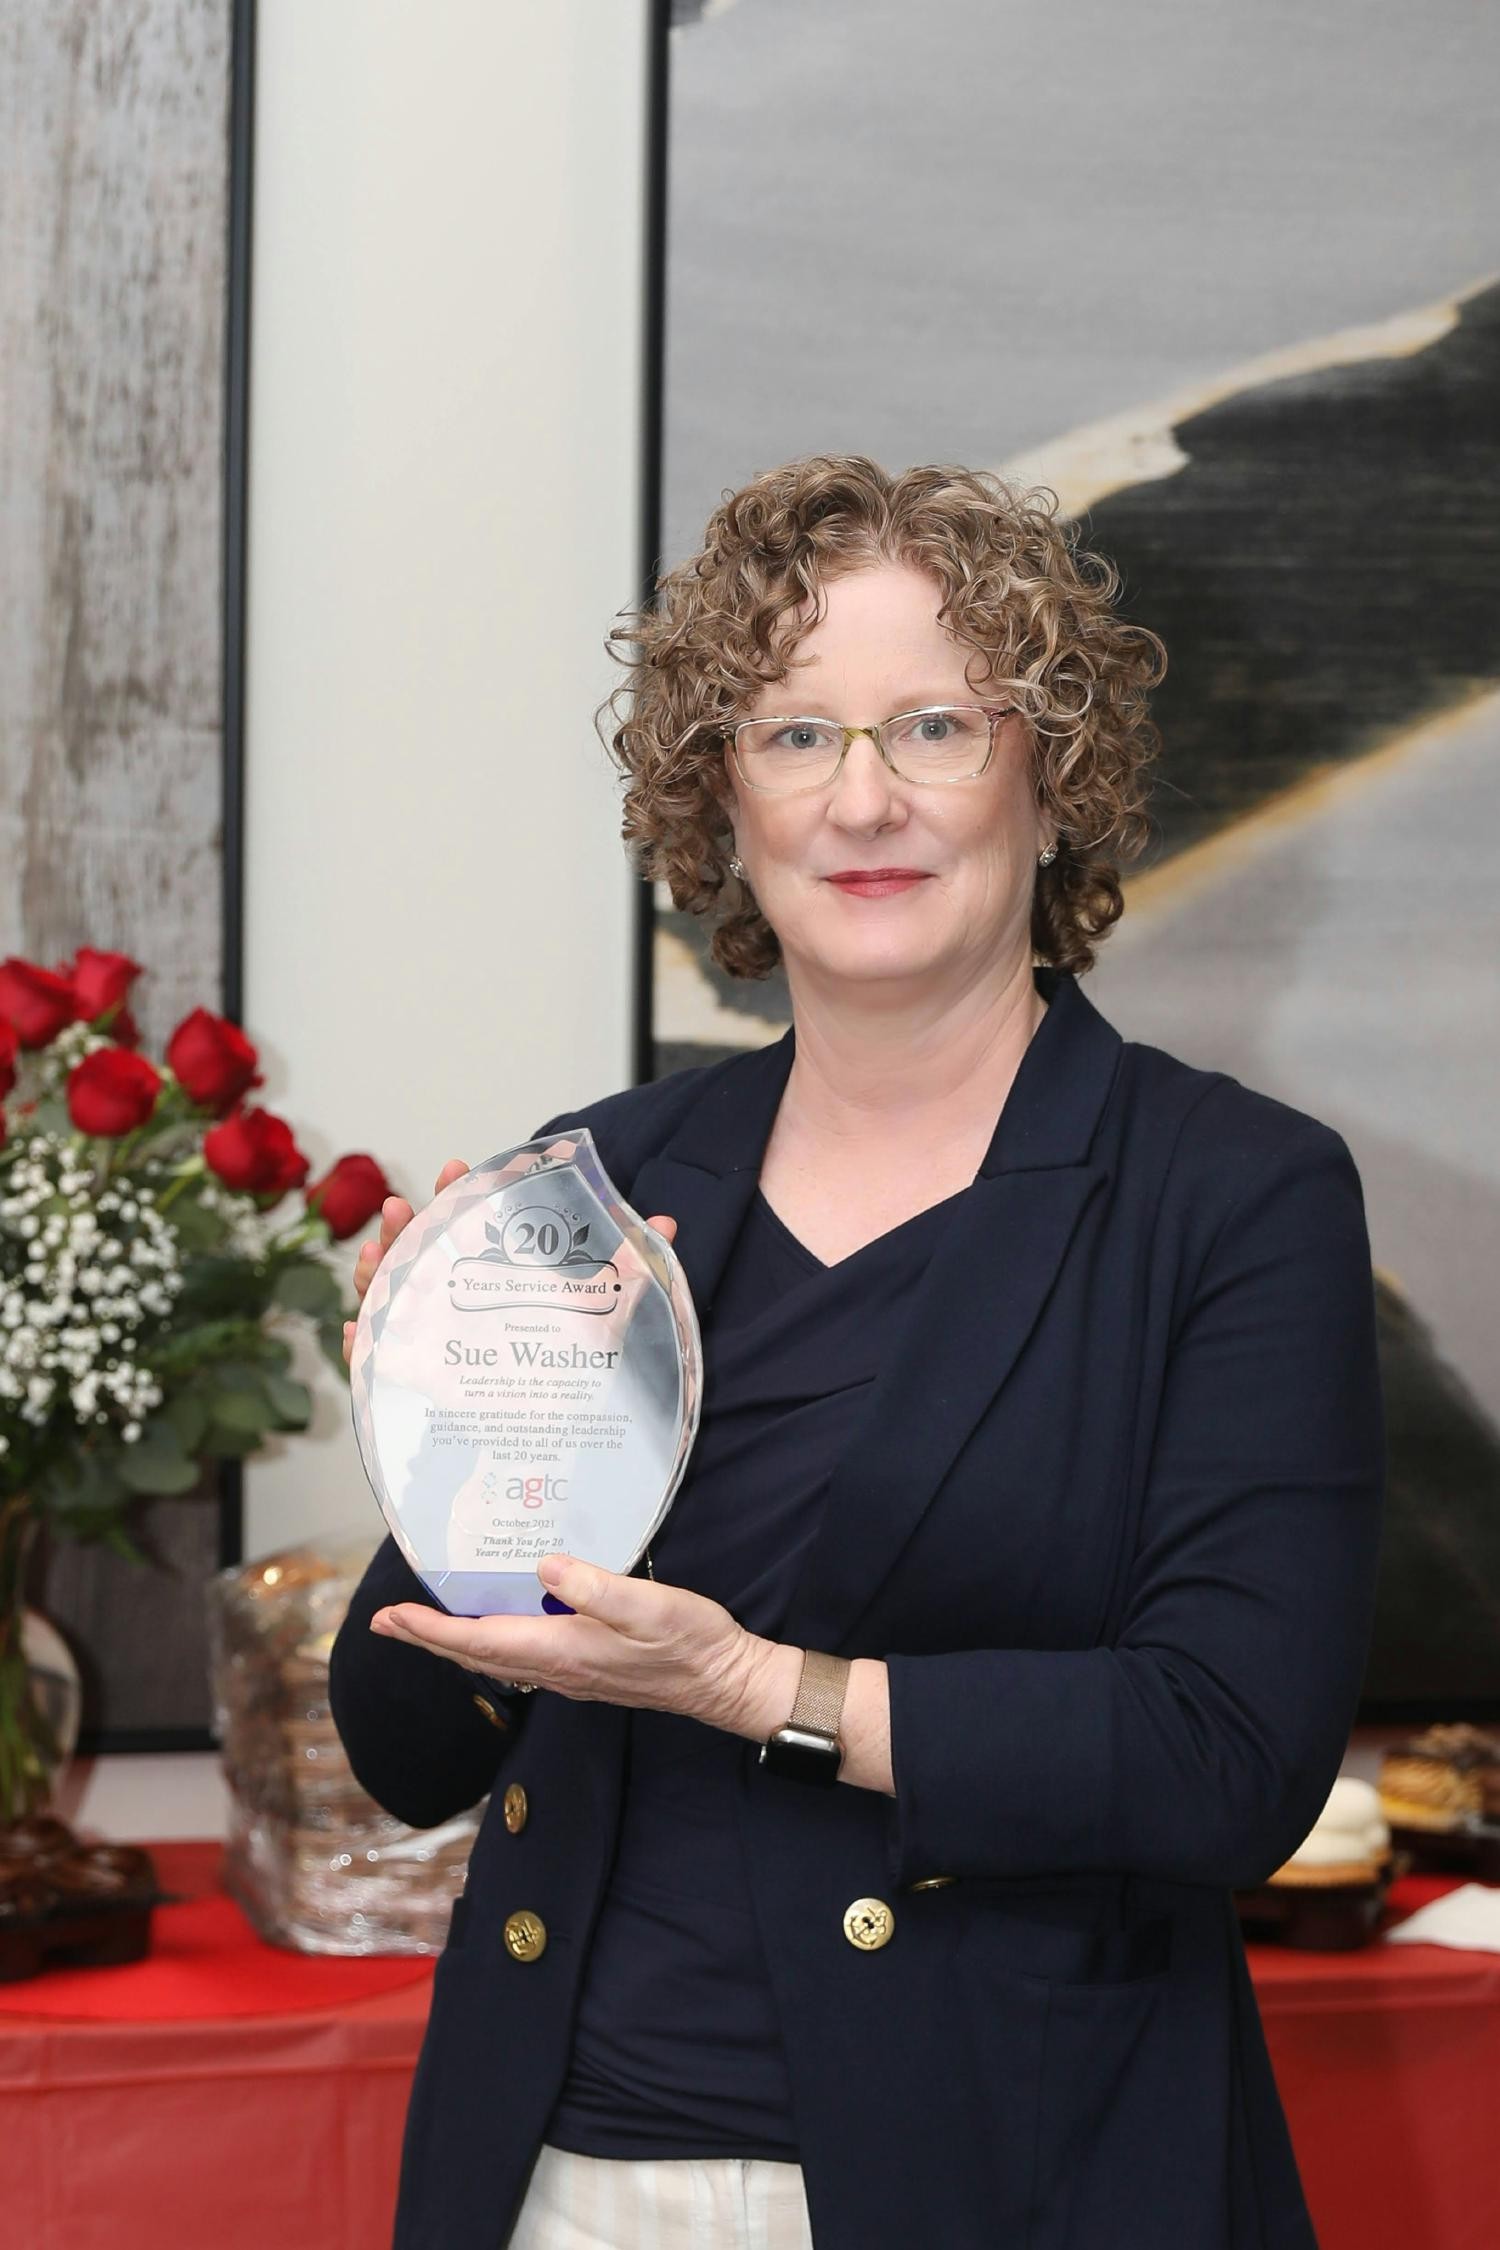 CEO, Sue Washer celebrates her 20th year service award